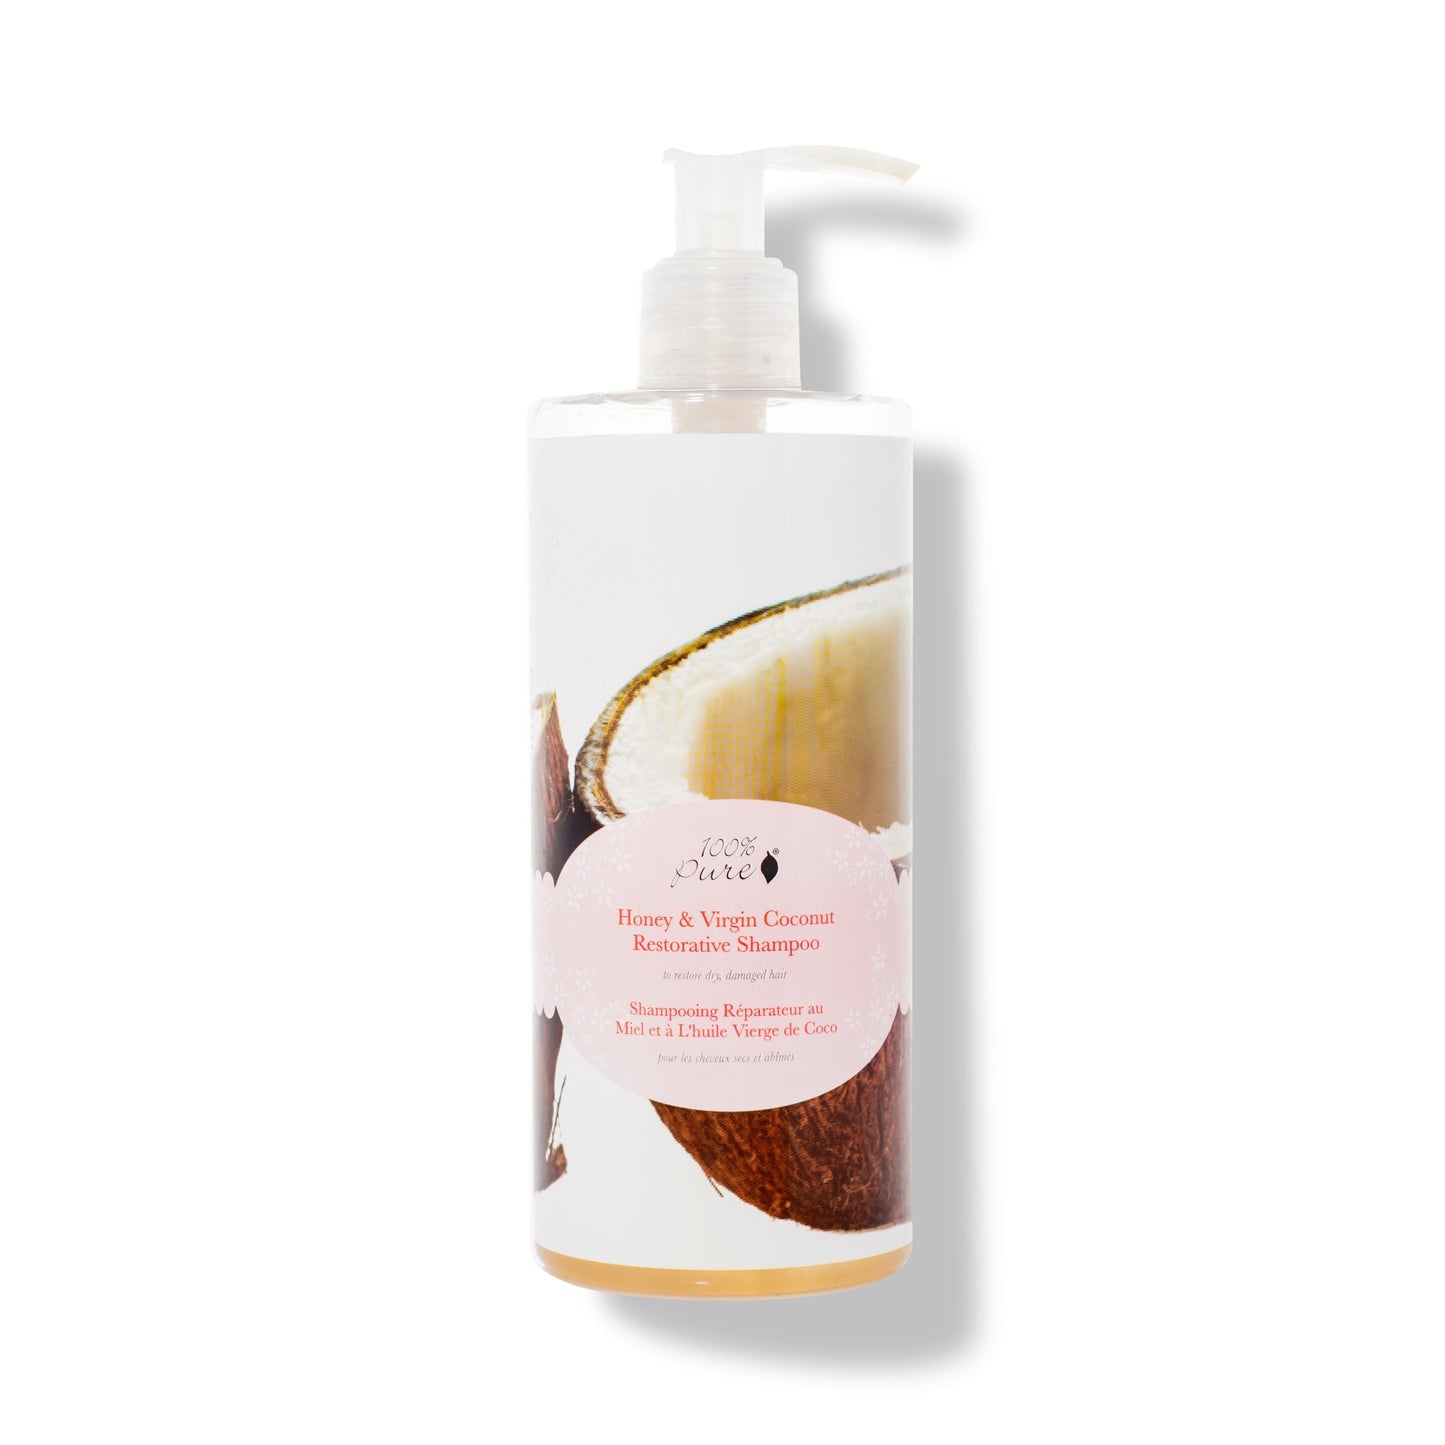 100% PURE Honey & Virgin Coconut Restorative Shampoo 13 oz